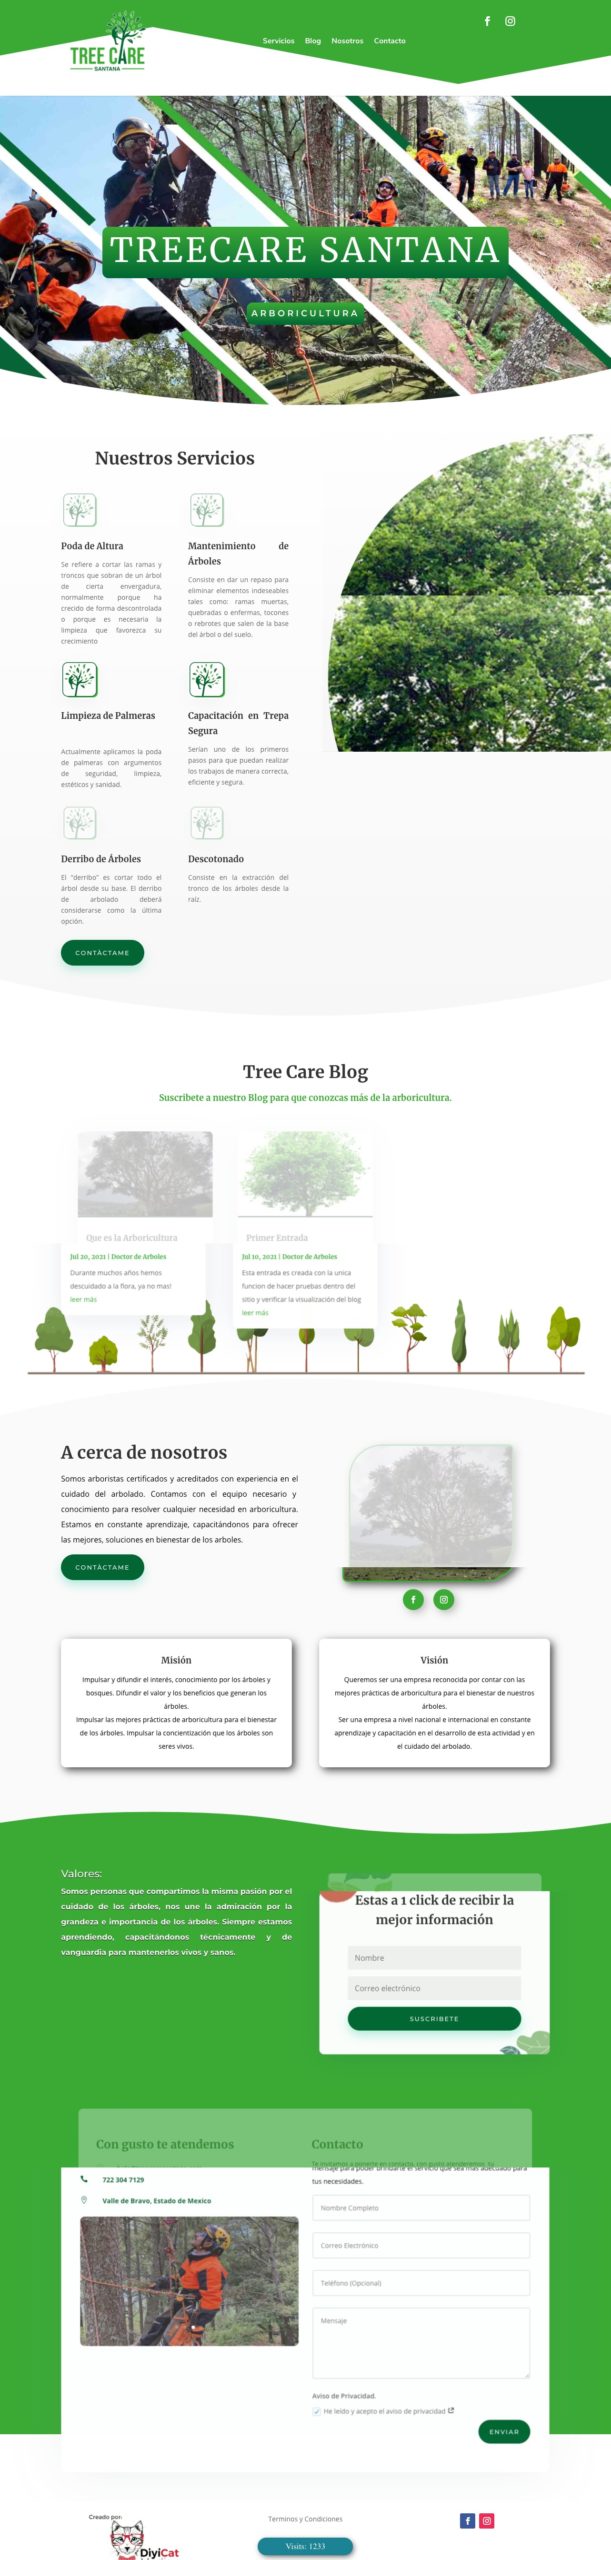 Web Site Tree Care Santana